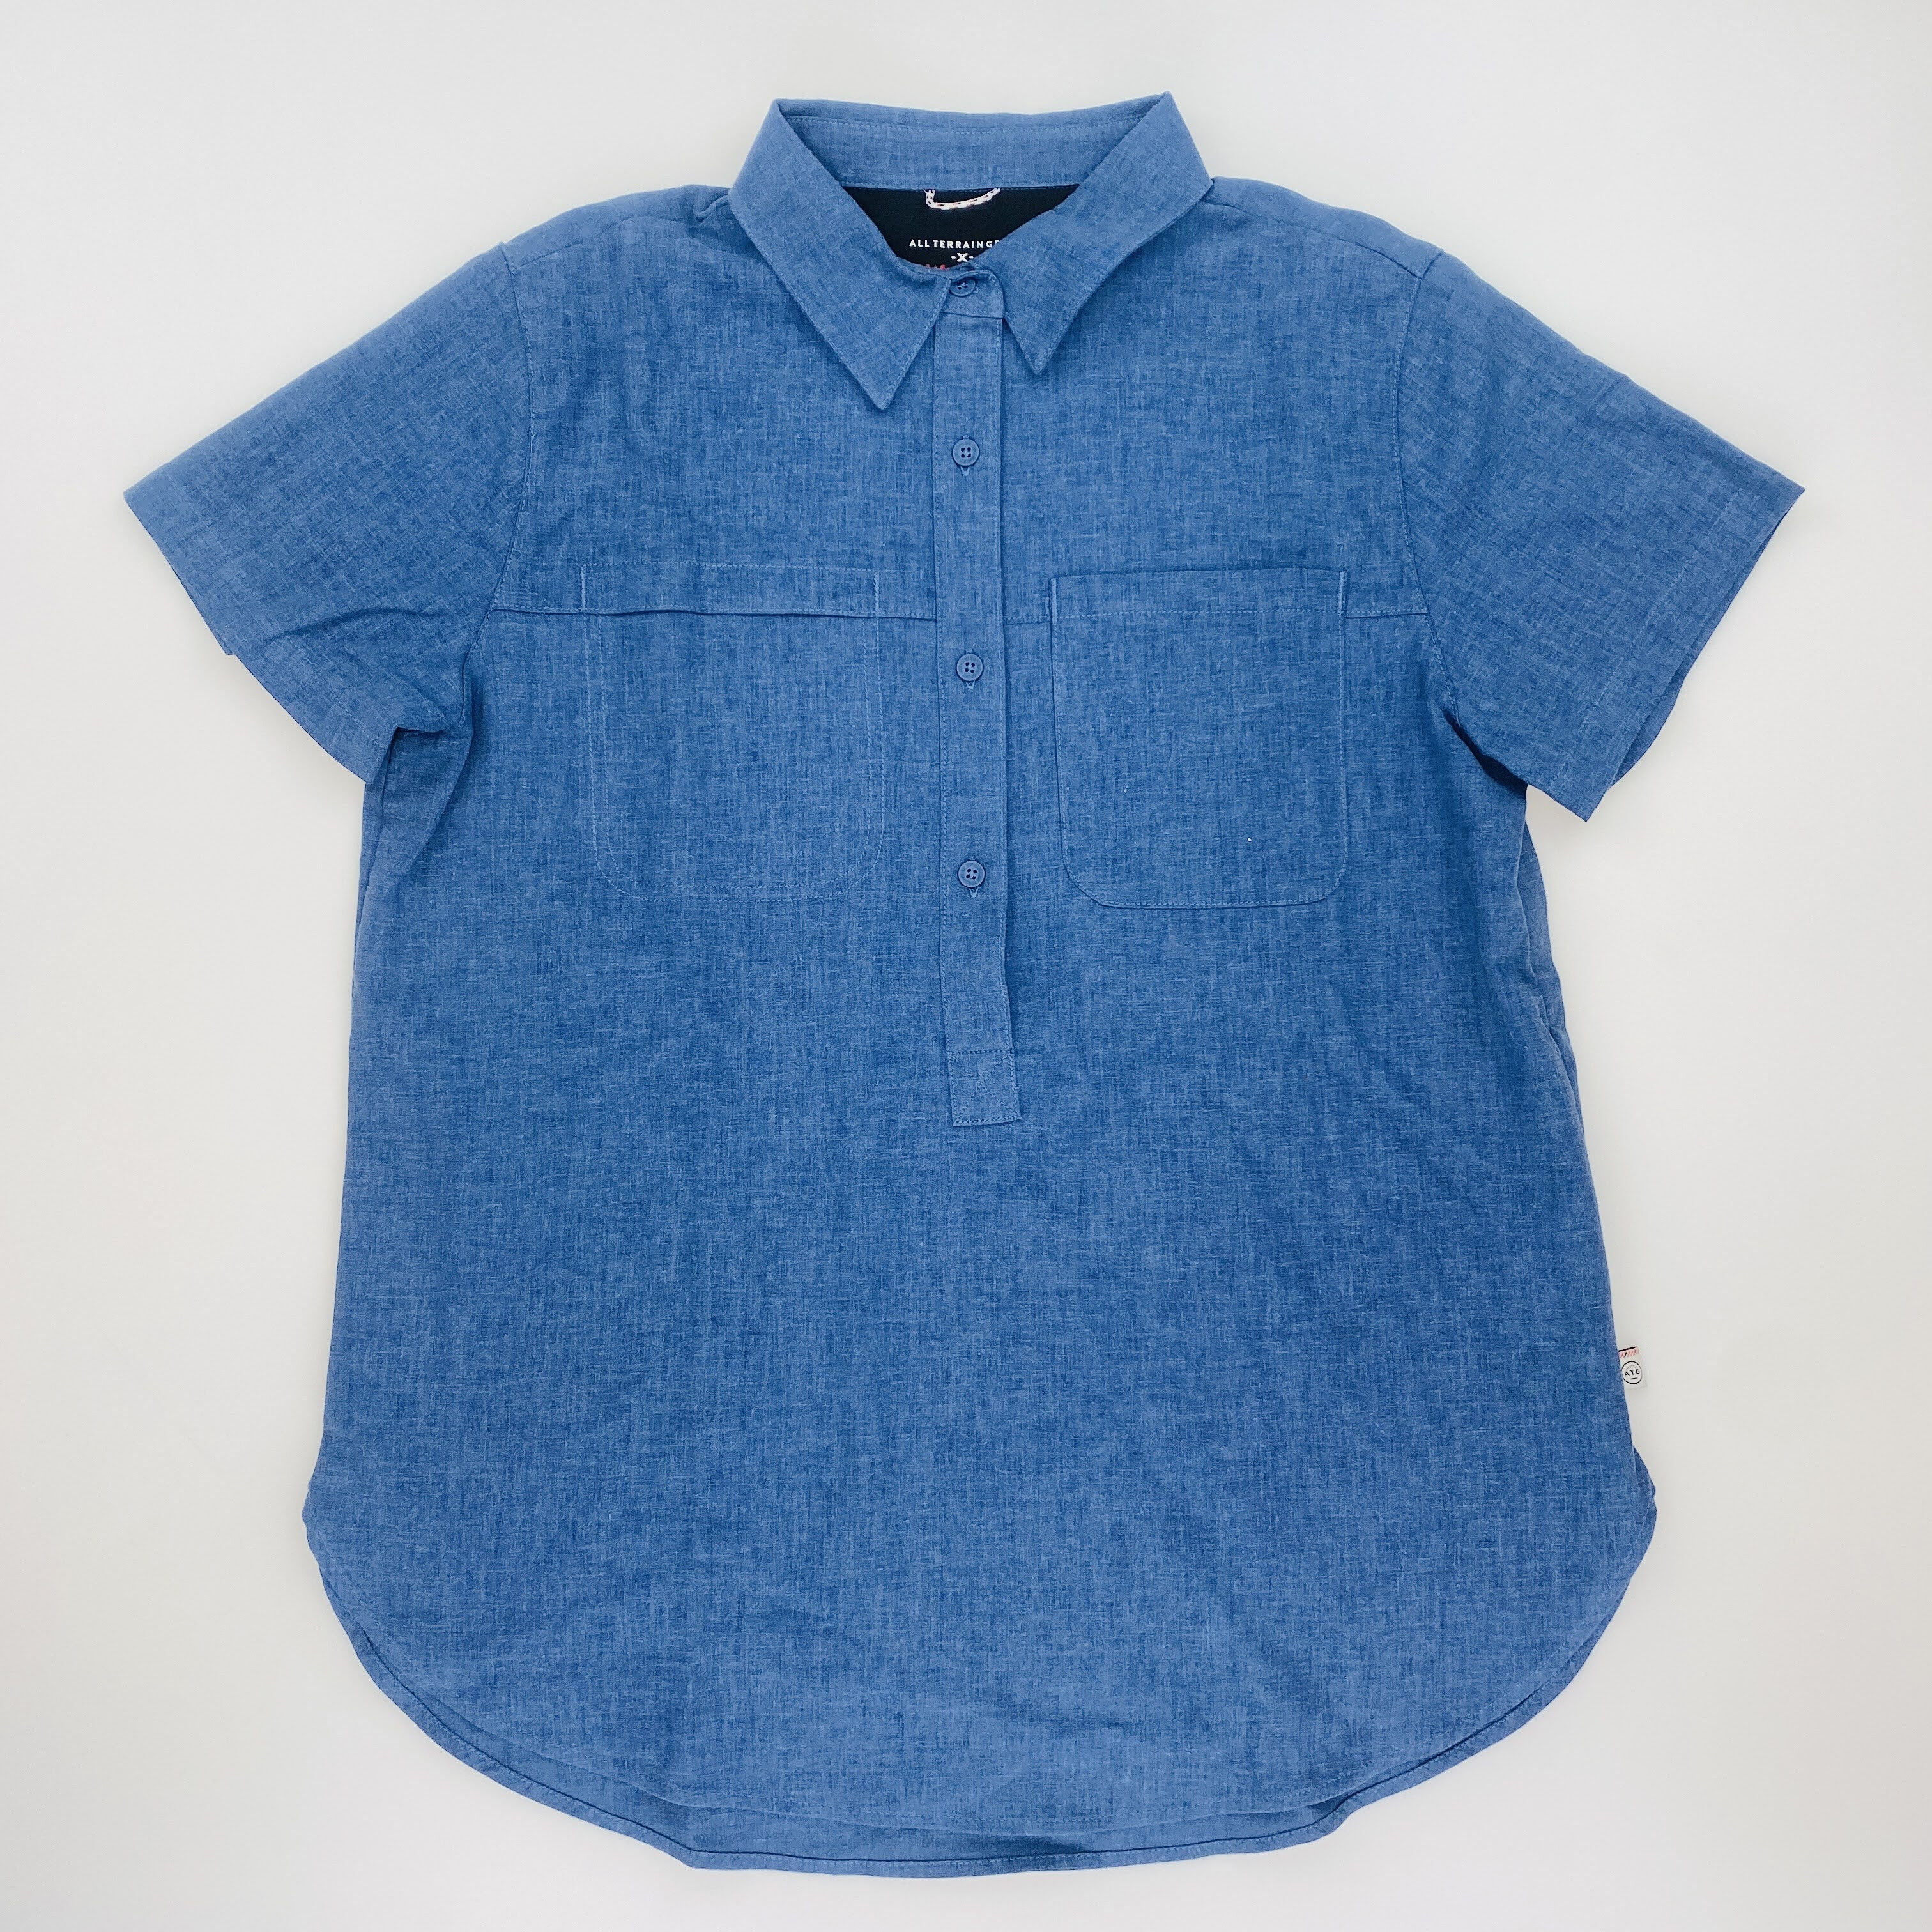 Wrangler Popover Shirt - Felpa con cappuccio di seconda mano - Donna - Blu - S | Hardloop